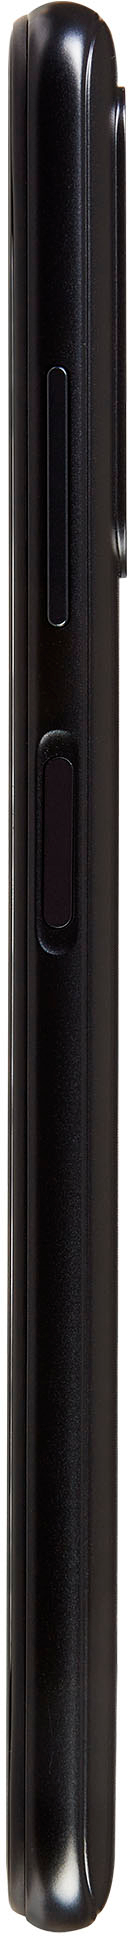 Left View: Total by Verizon - Samsung Galaxy A03s S135DL 32GB Prepaid - Black